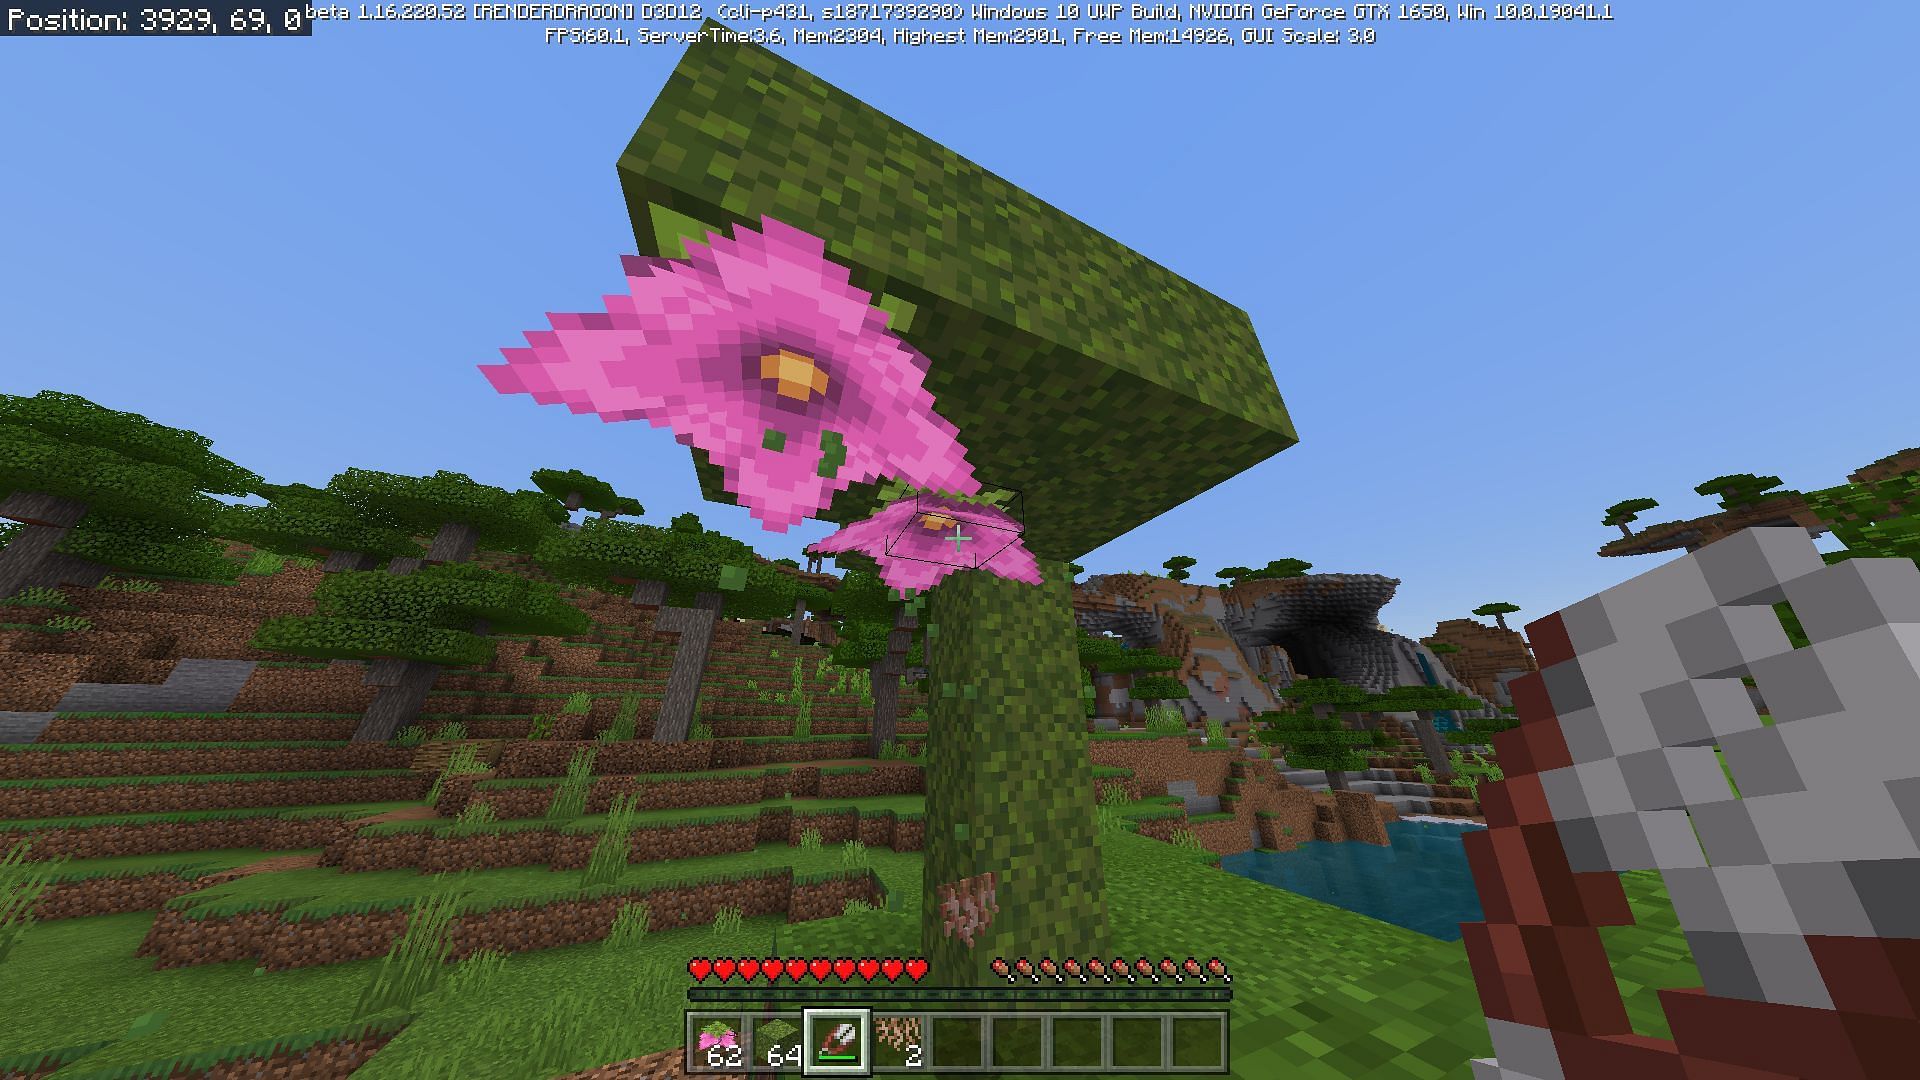 Spore blossoms in Minecraft (Image via Mojang)